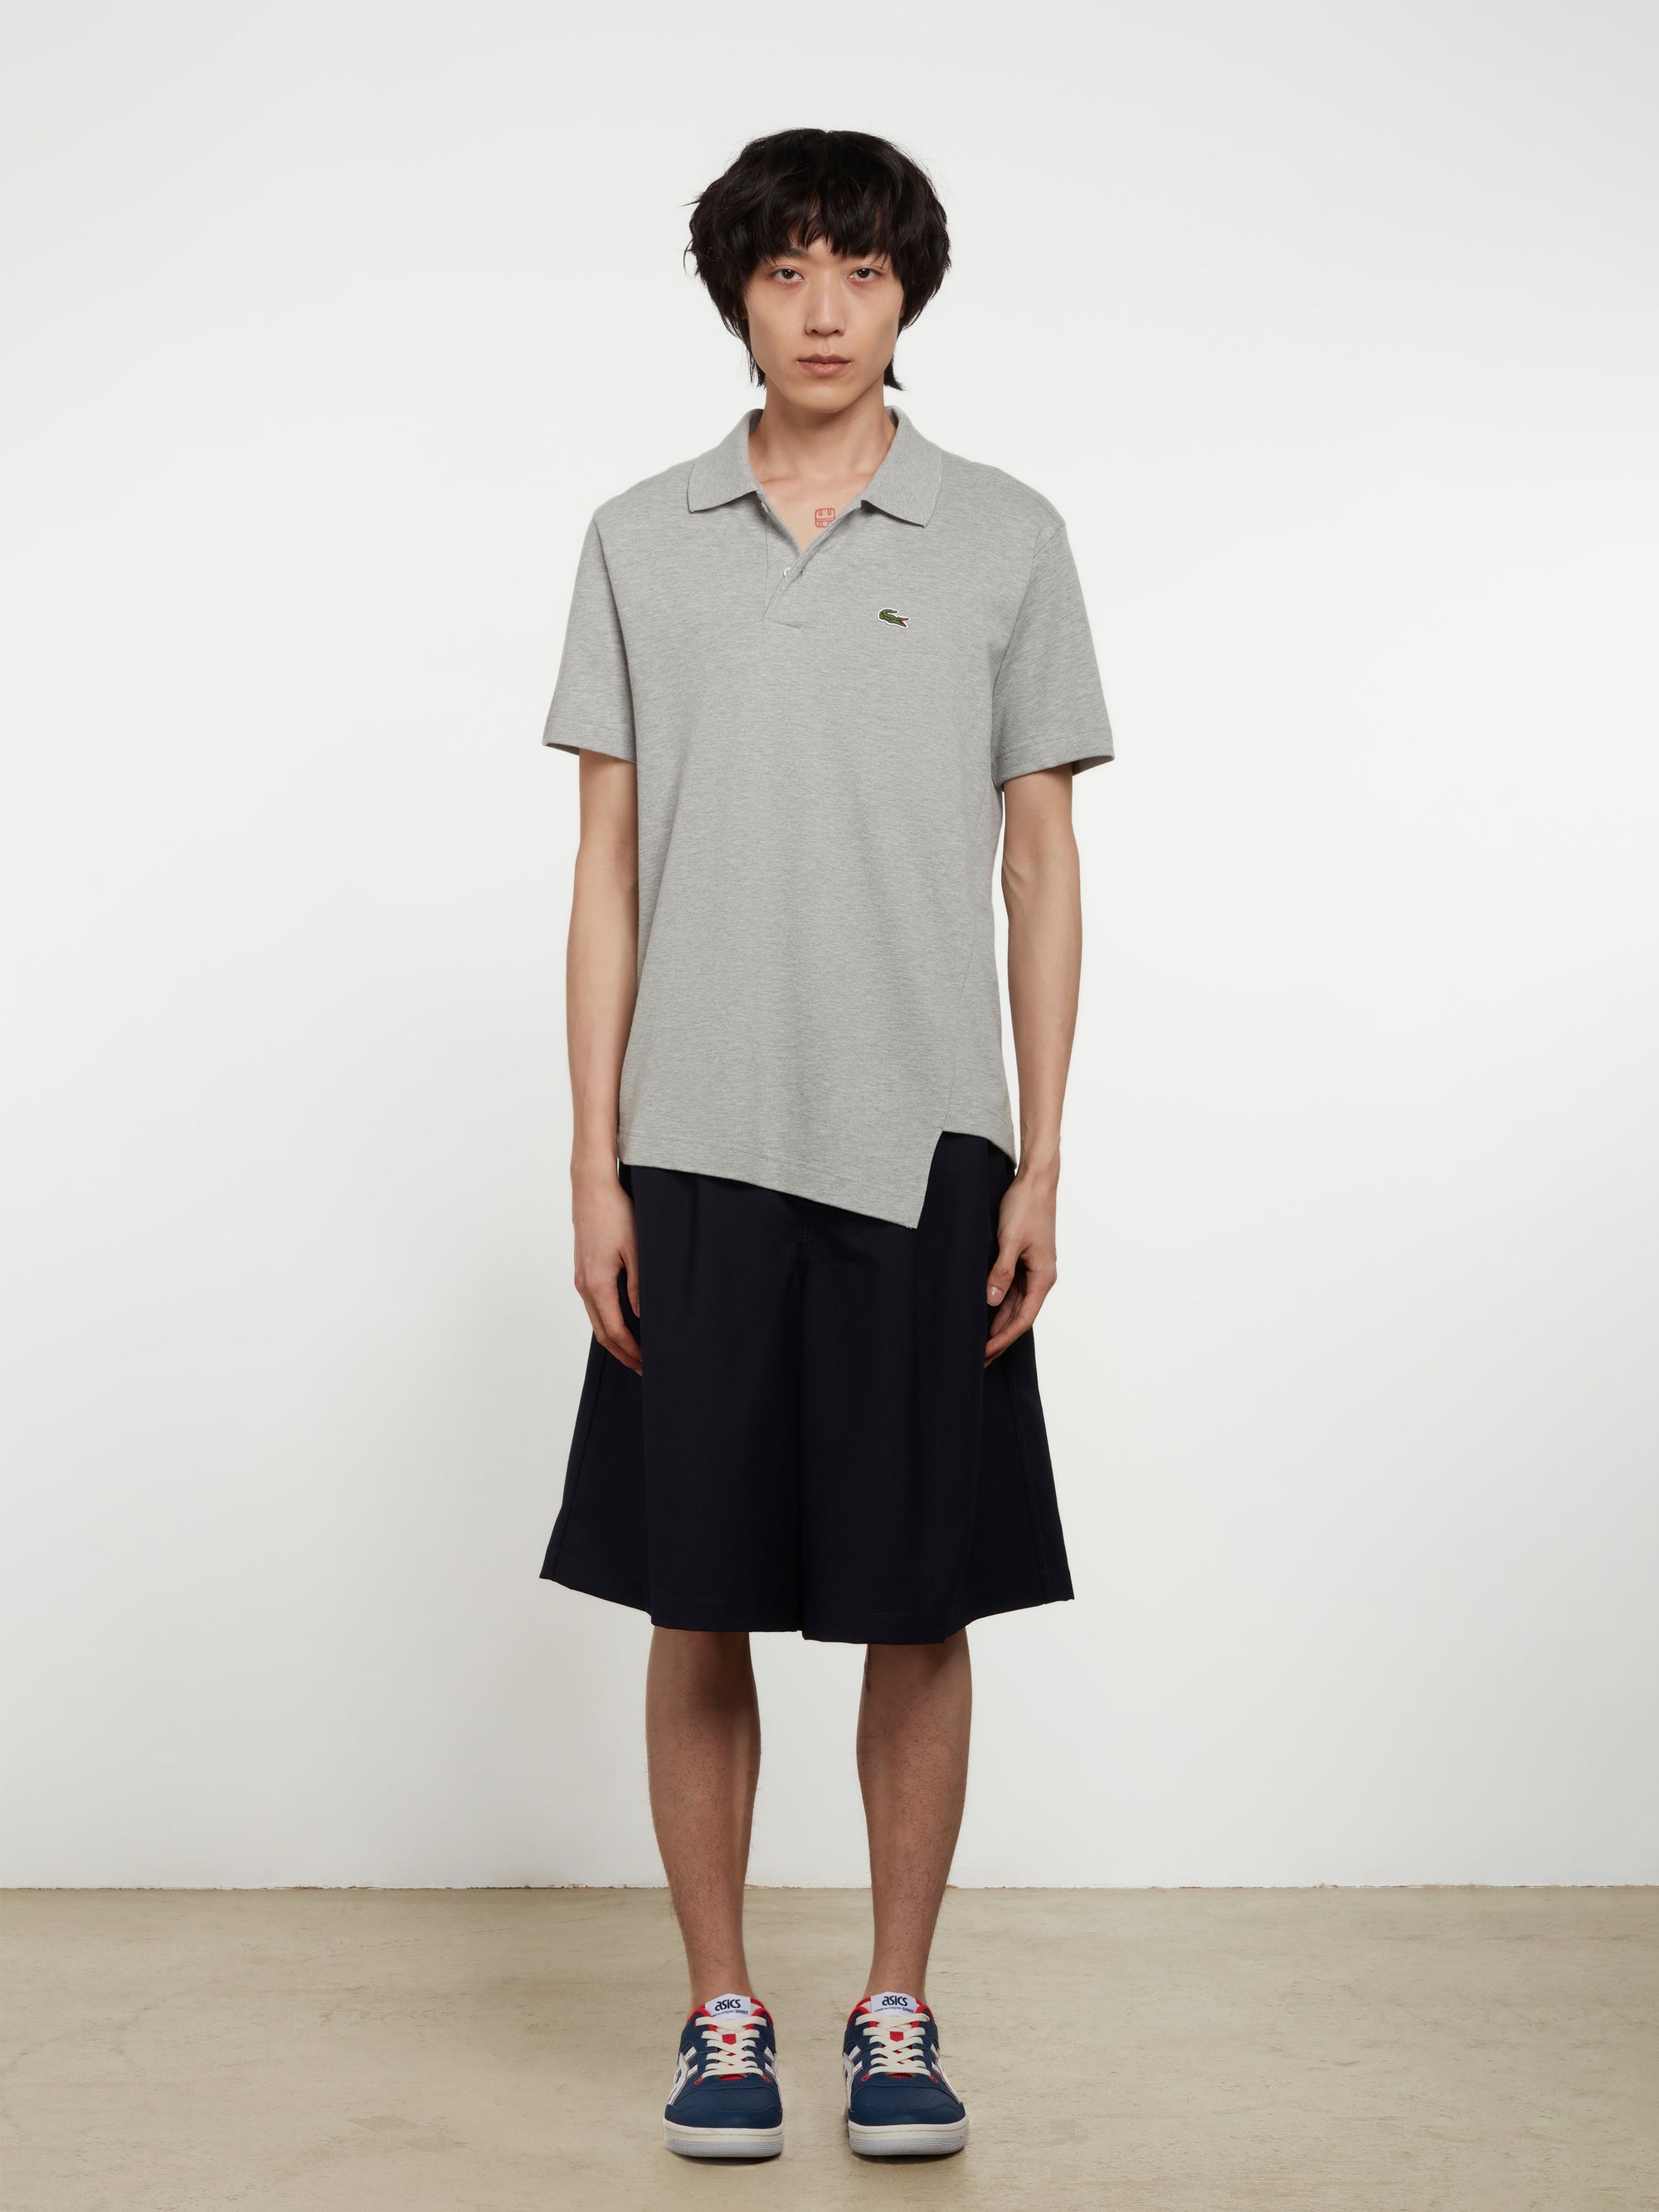 CDG Shirt - Lacoste Men's Asymmetric Polo Shirt - (Grey) view 4